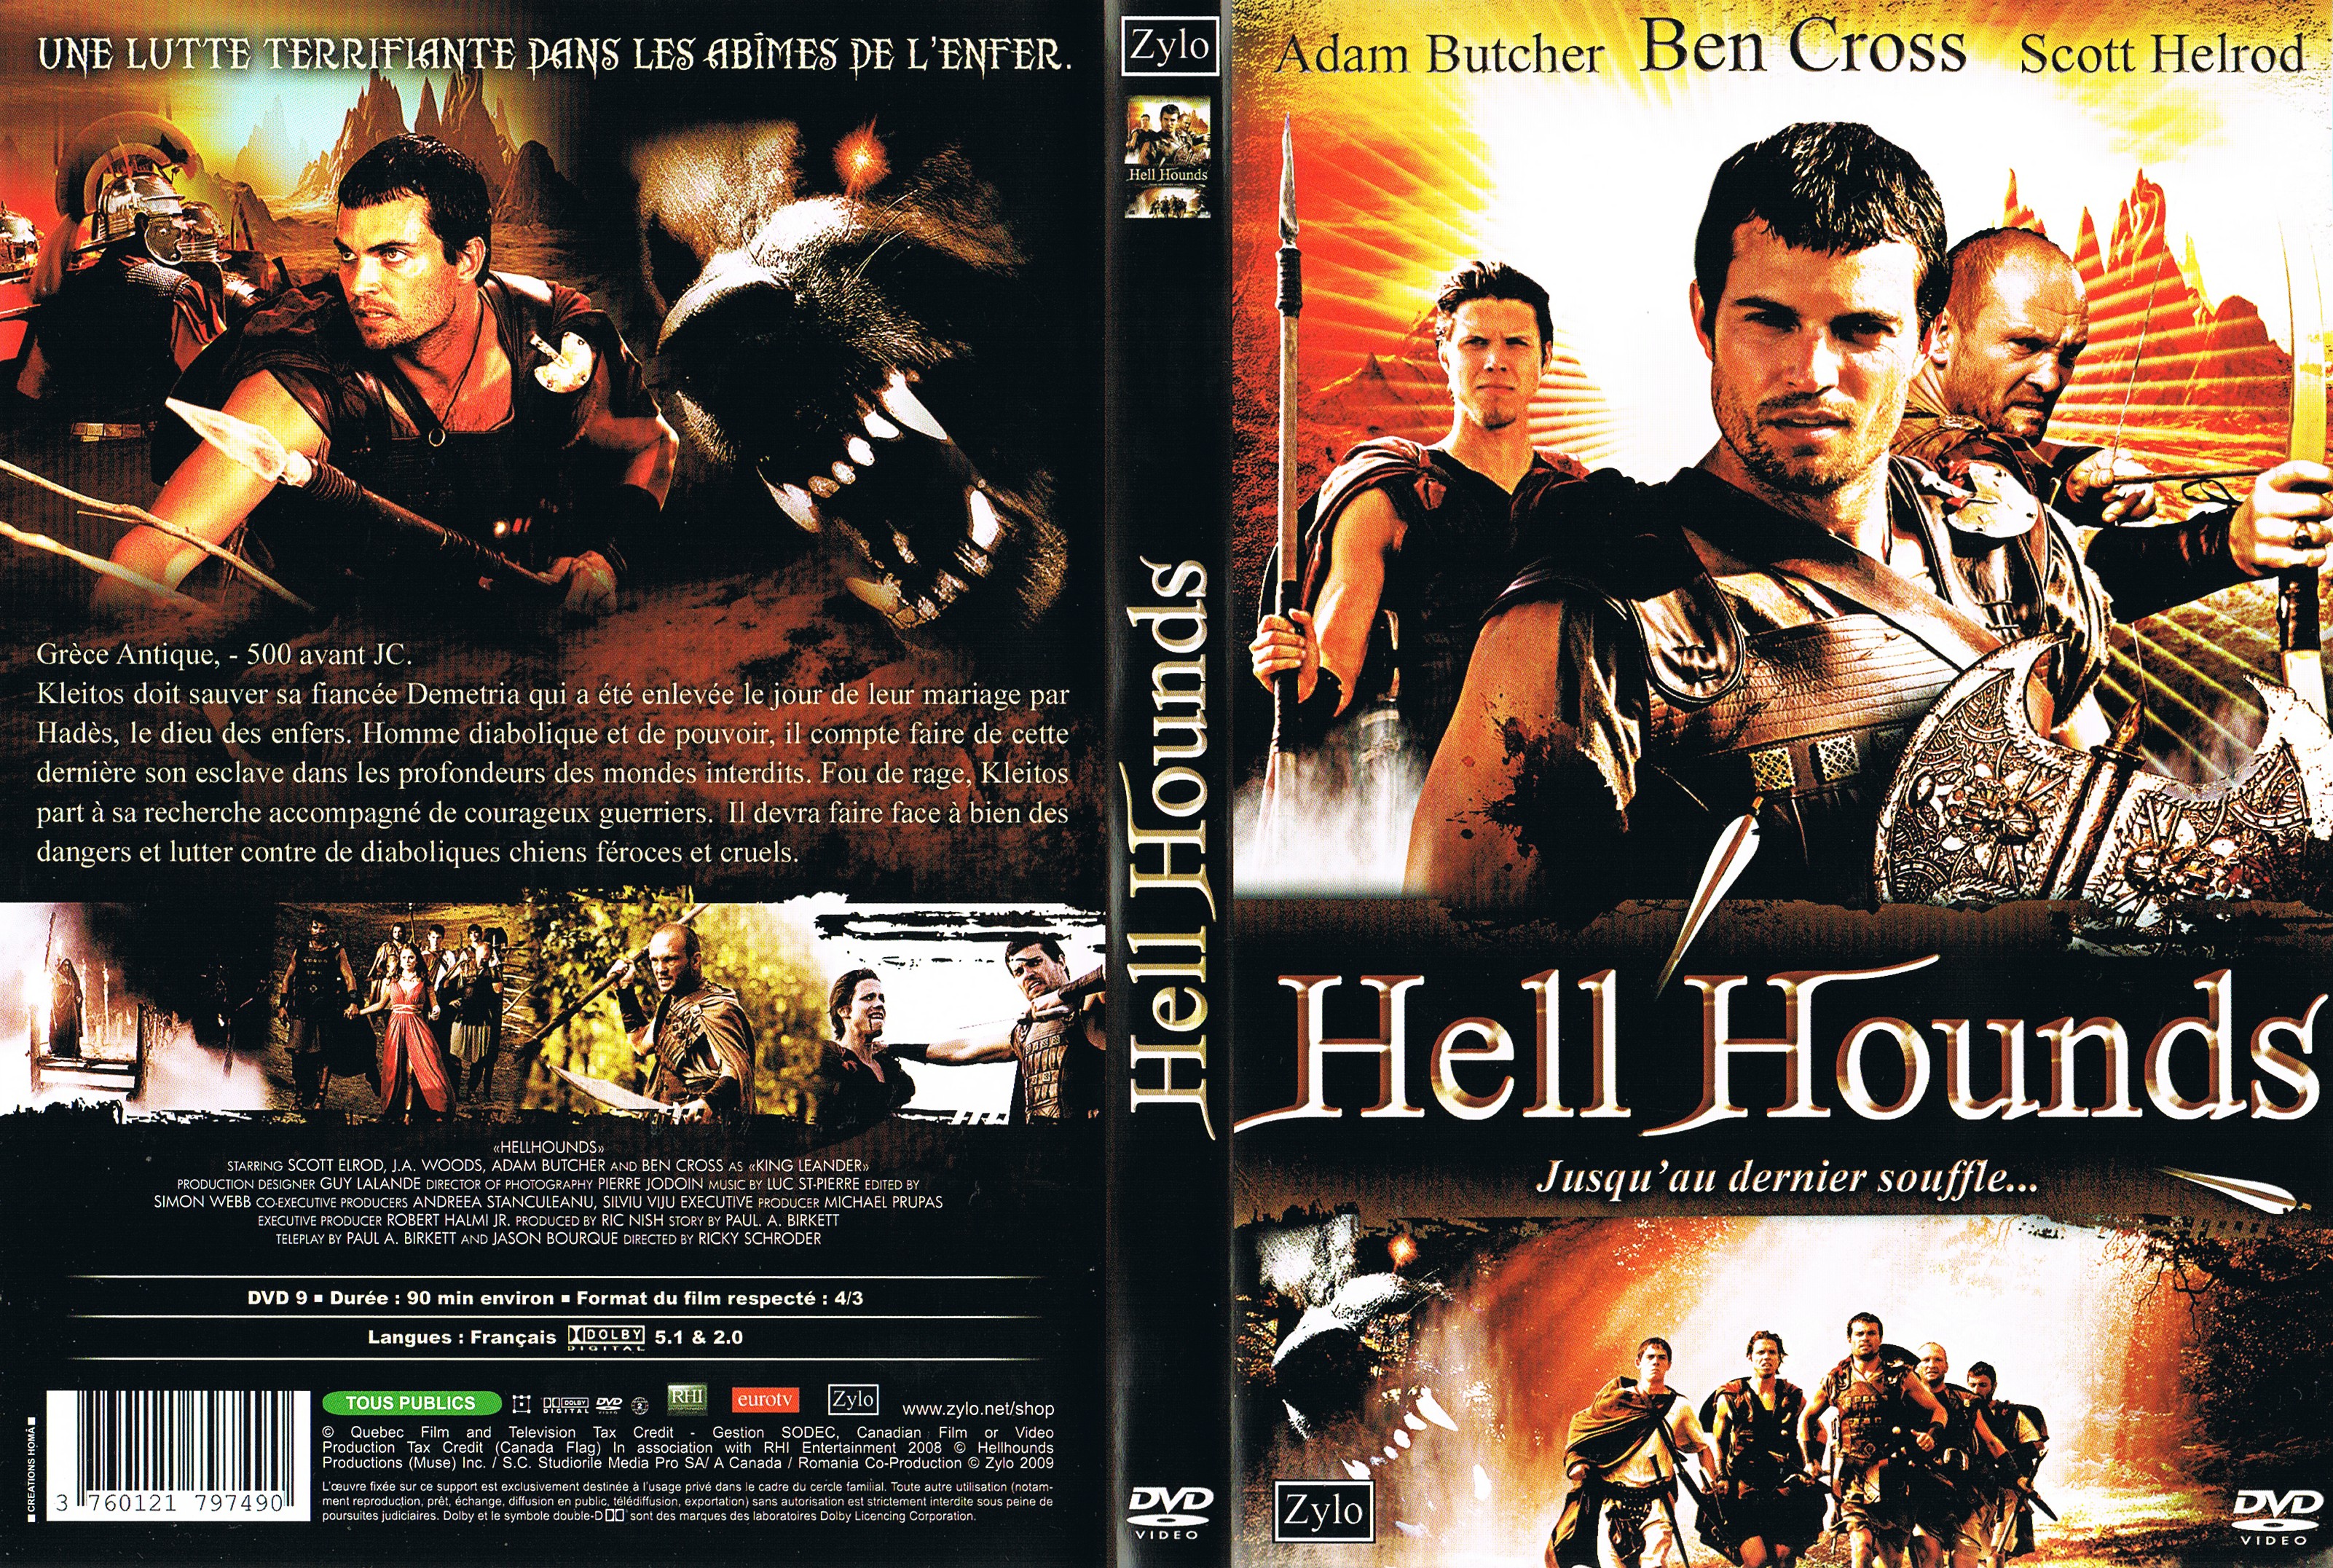 Jaquette DVD Hell Hounds